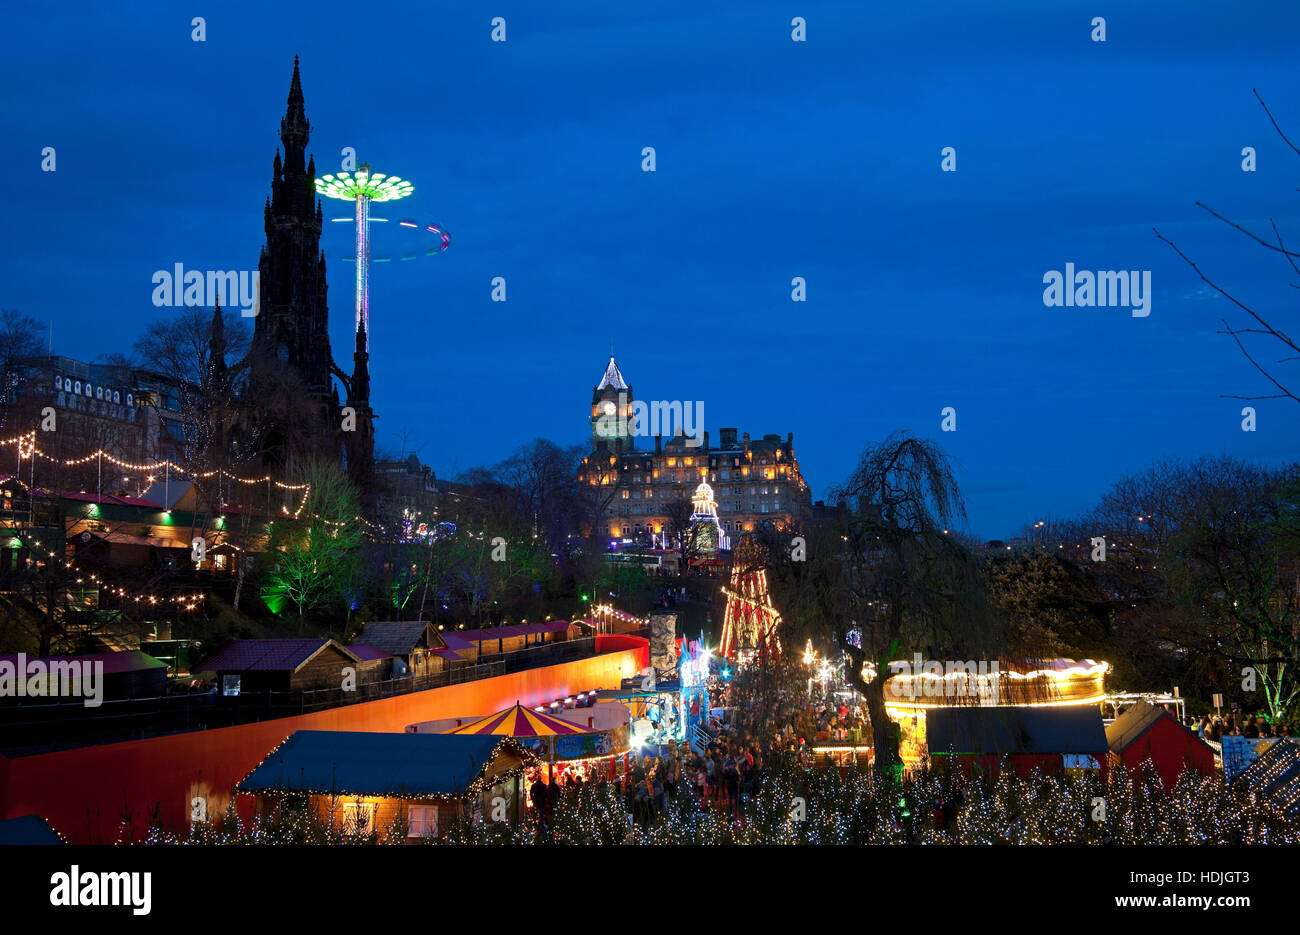 Edinburgh Christmas illuminations lights and fun fair, East Princes Street Gardens, Scotland UK 2016 Stock Photo